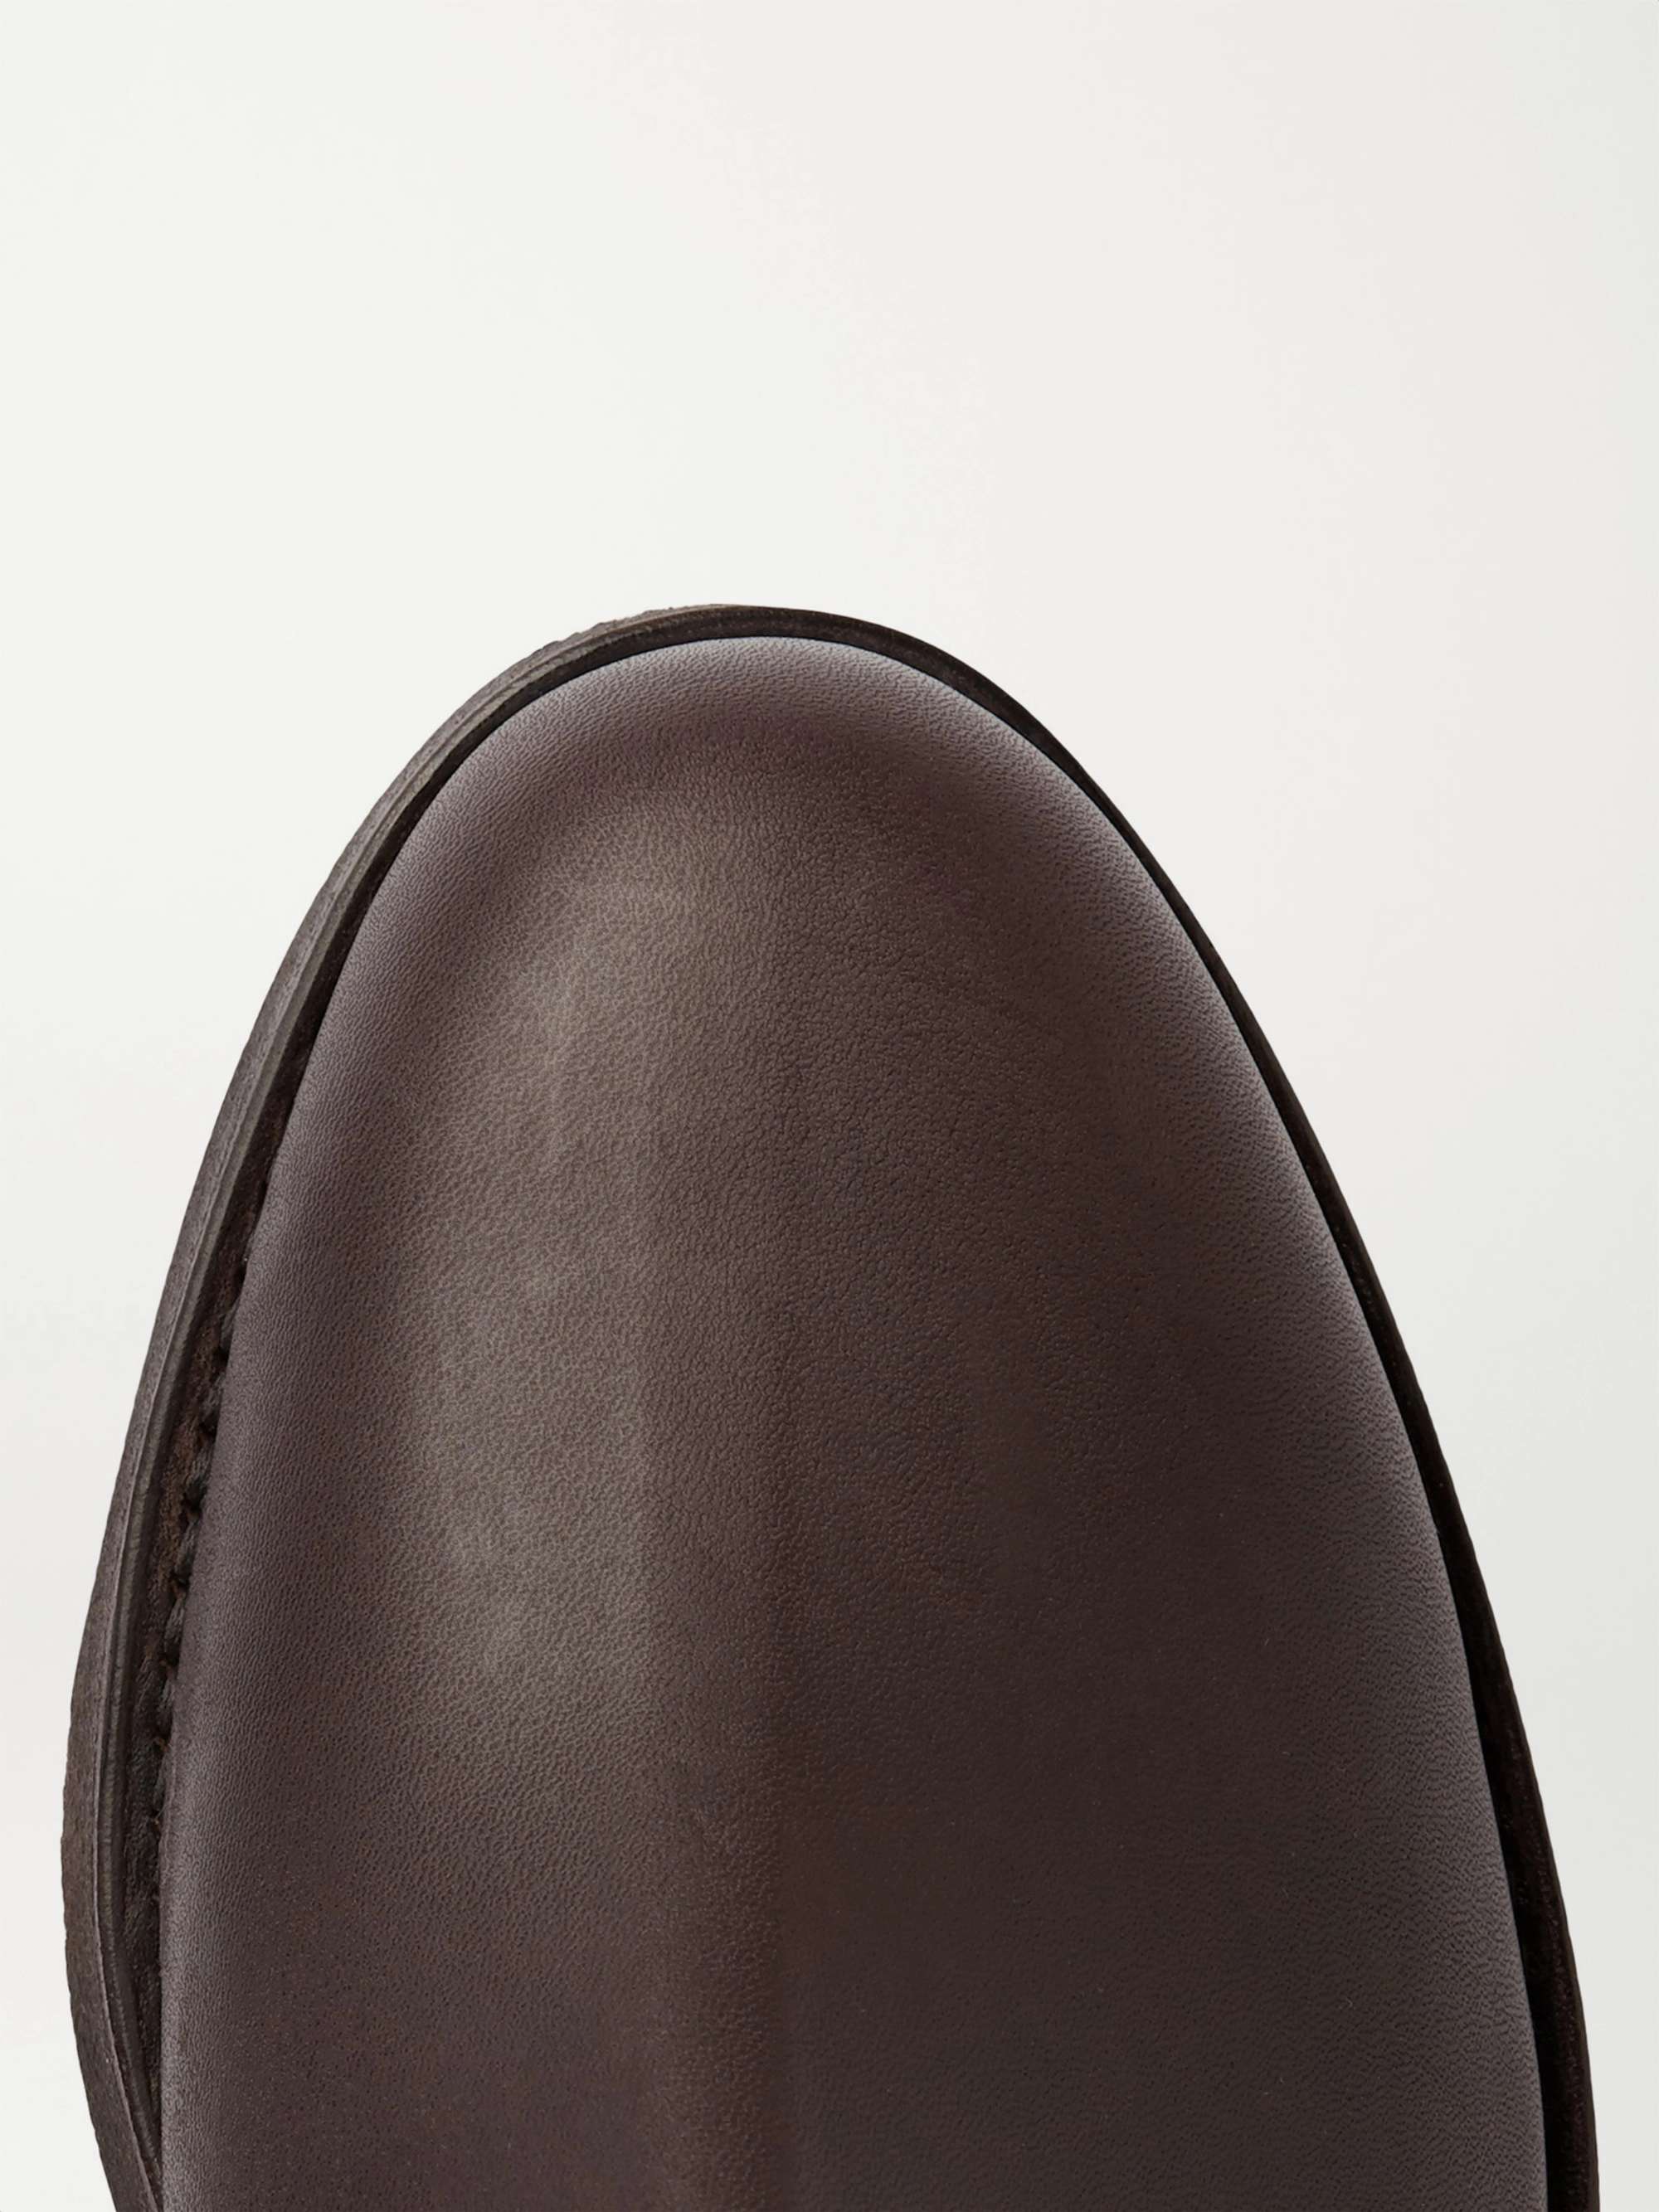 Roland Mouret Rm Williams Gardener Whole Cut Leather Chelsea Boots